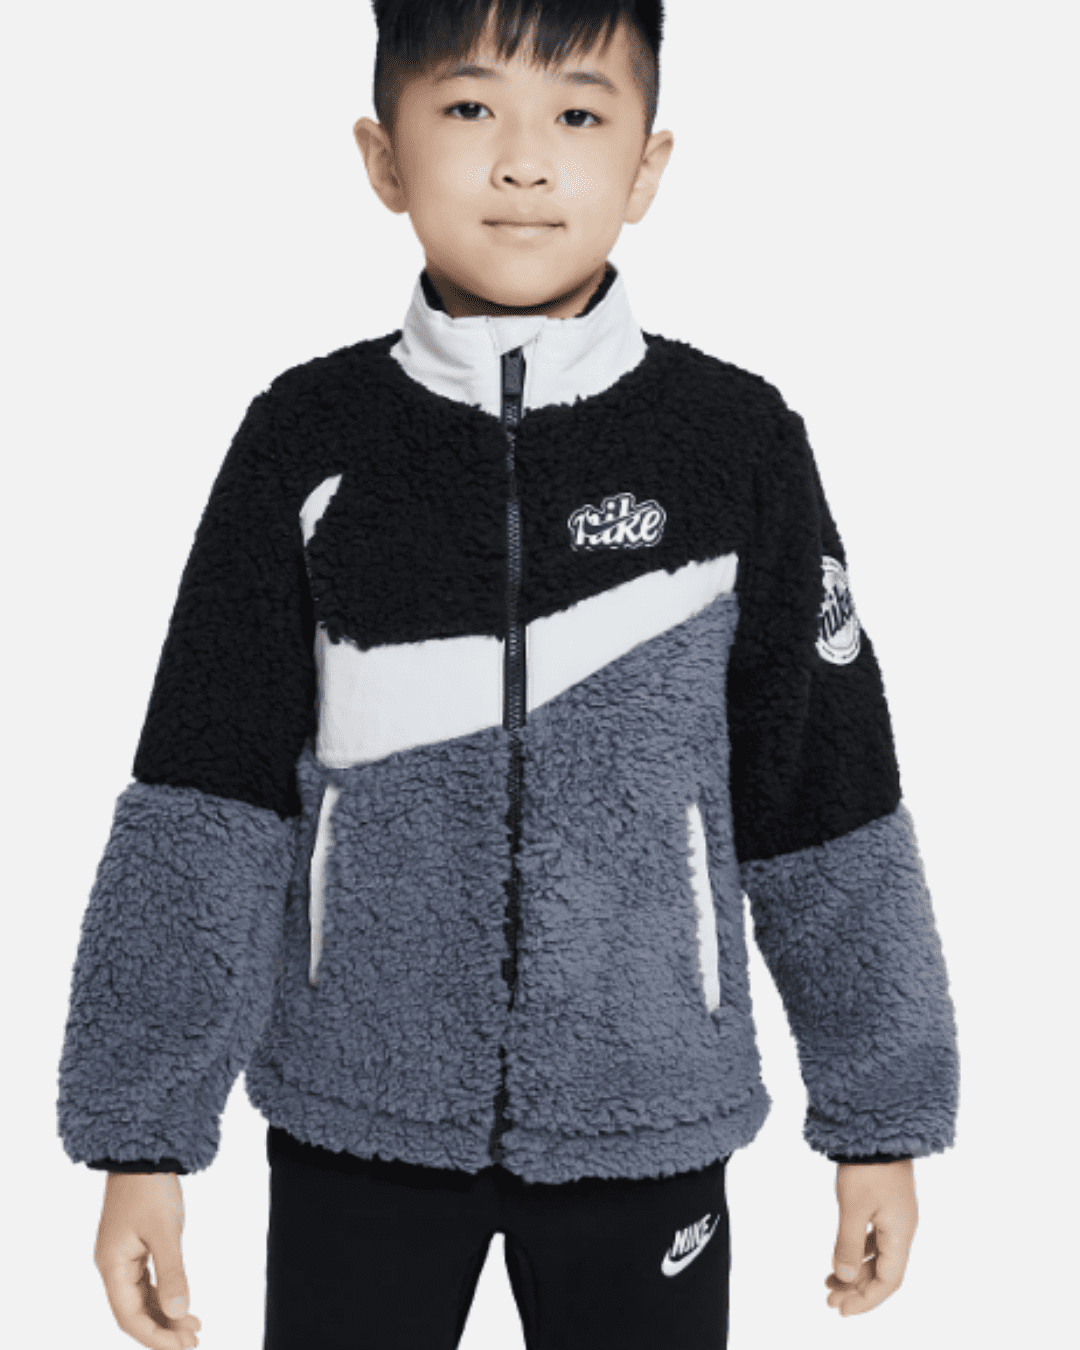 Nike Sherpa Jacket Kids - Black/Grey